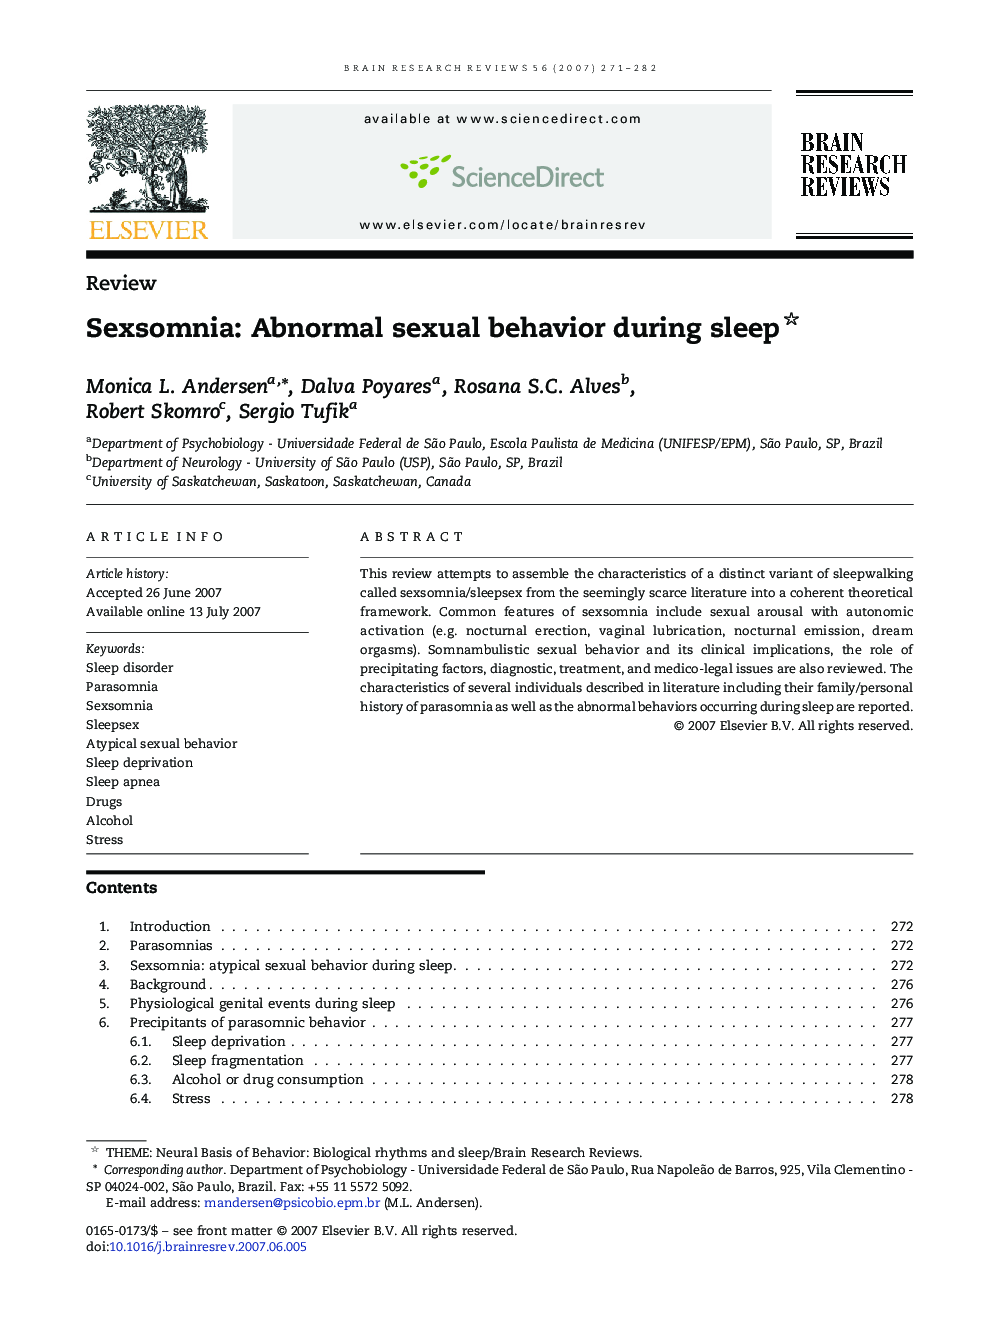 Sexsomnia: Abnormal sexual behavior during sleep